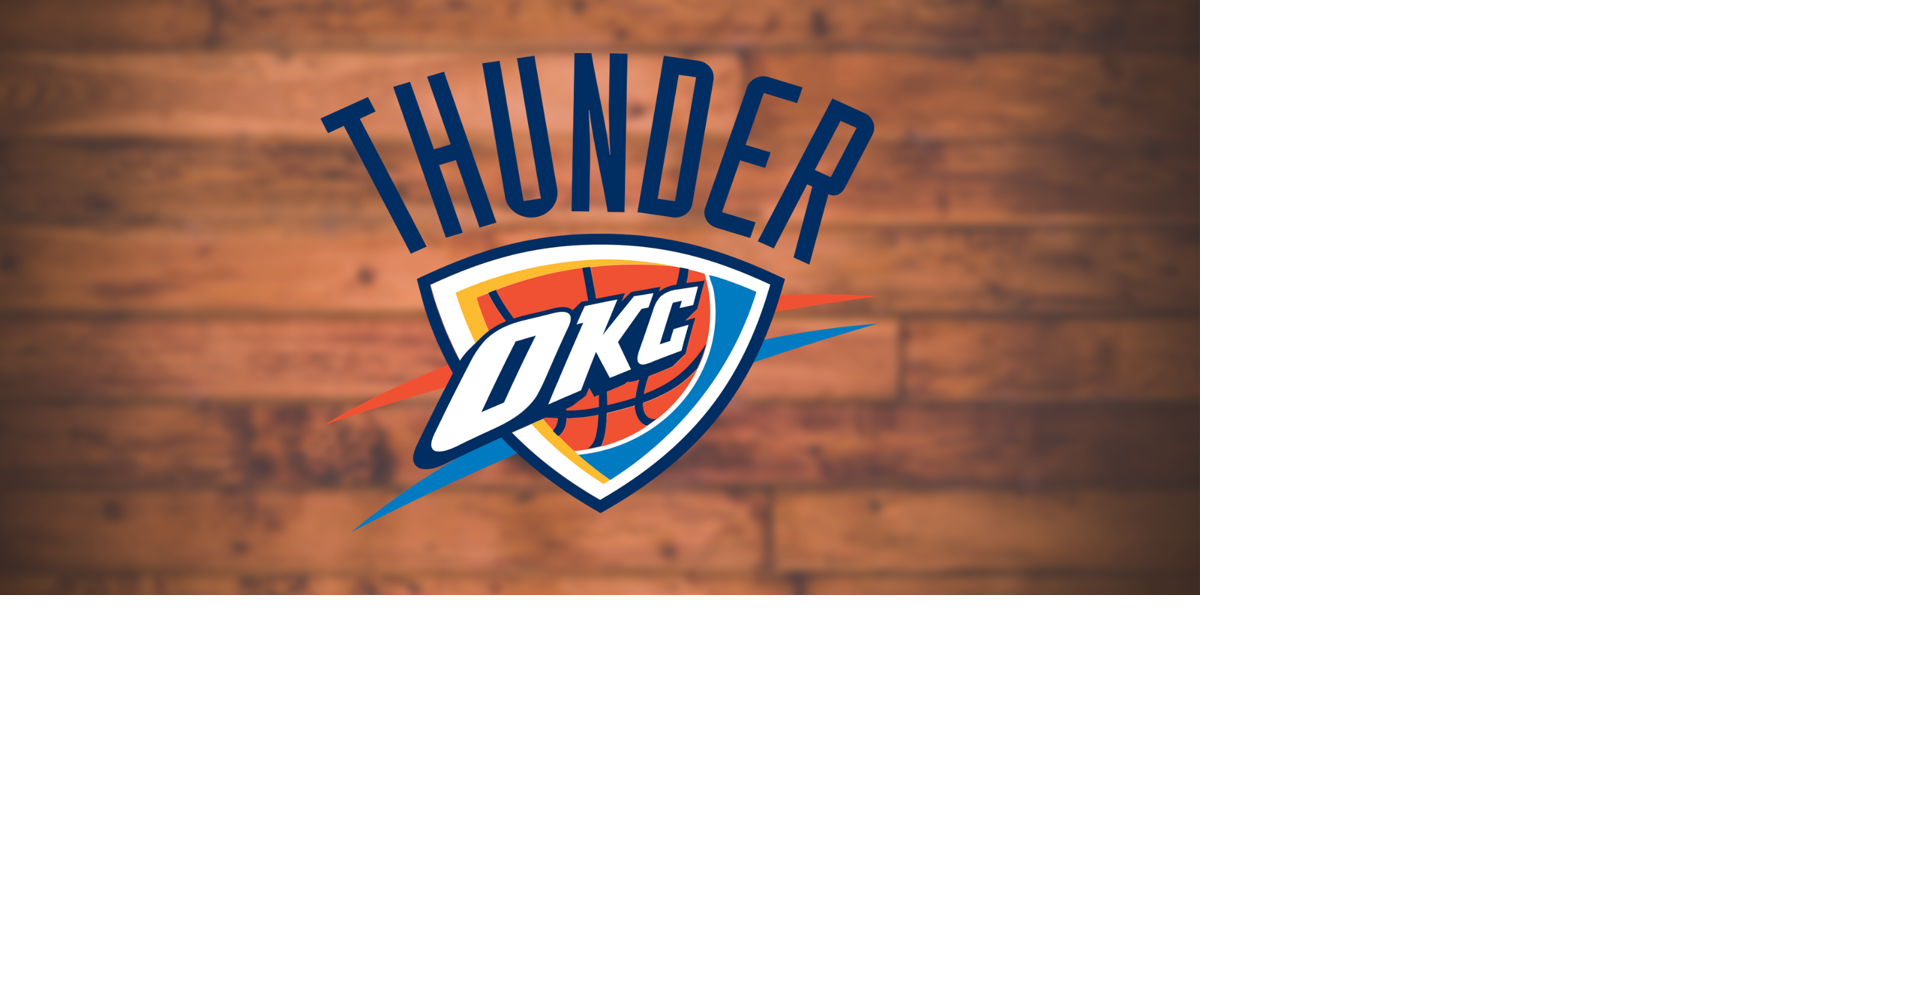 Oklahoma City Thunder announces preseason game in Tulsa